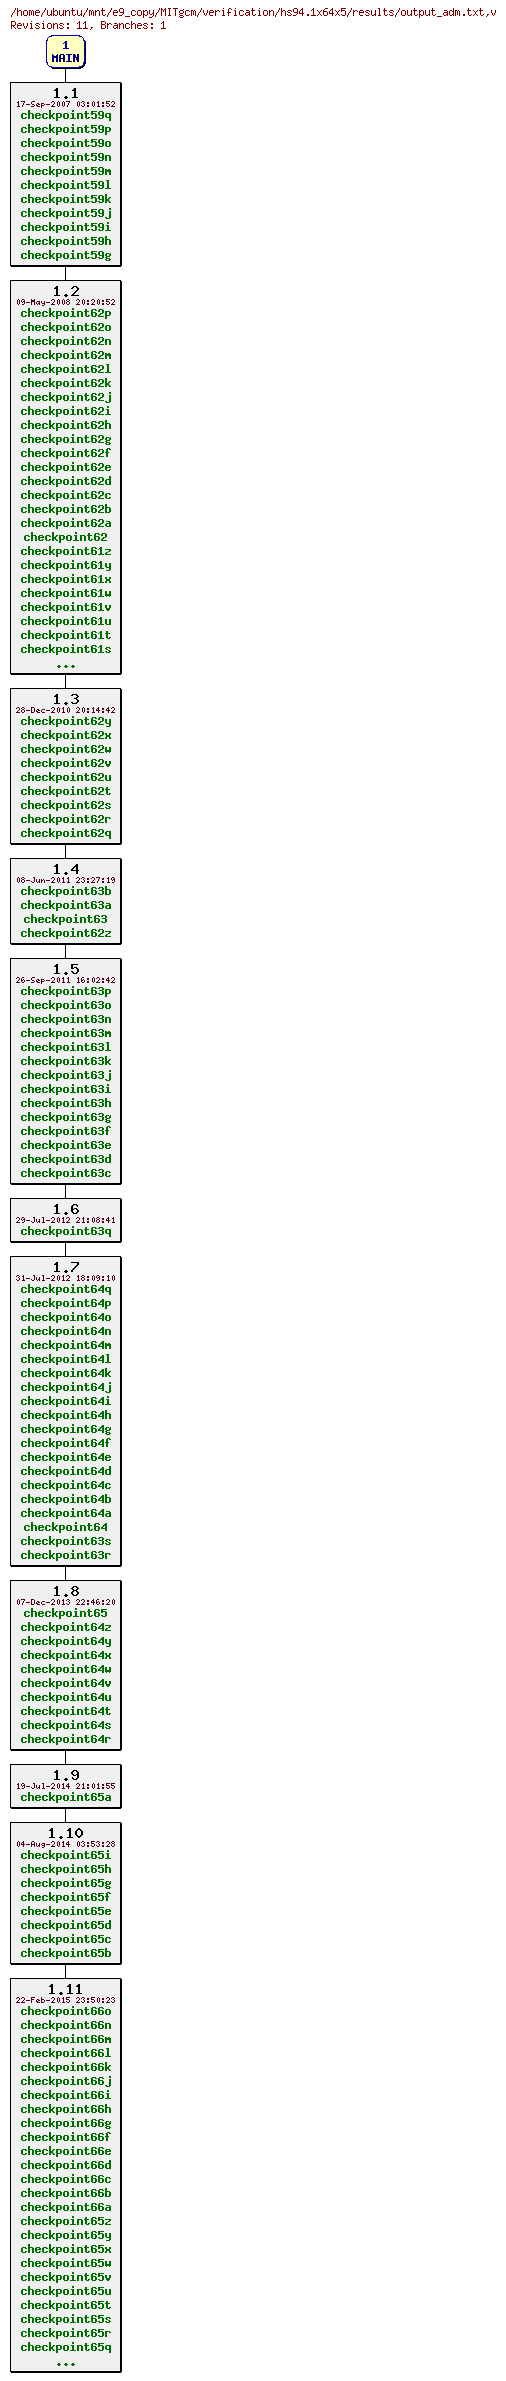 Revisions of MITgcm/verification/hs94.1x64x5/results/output_adm.txt